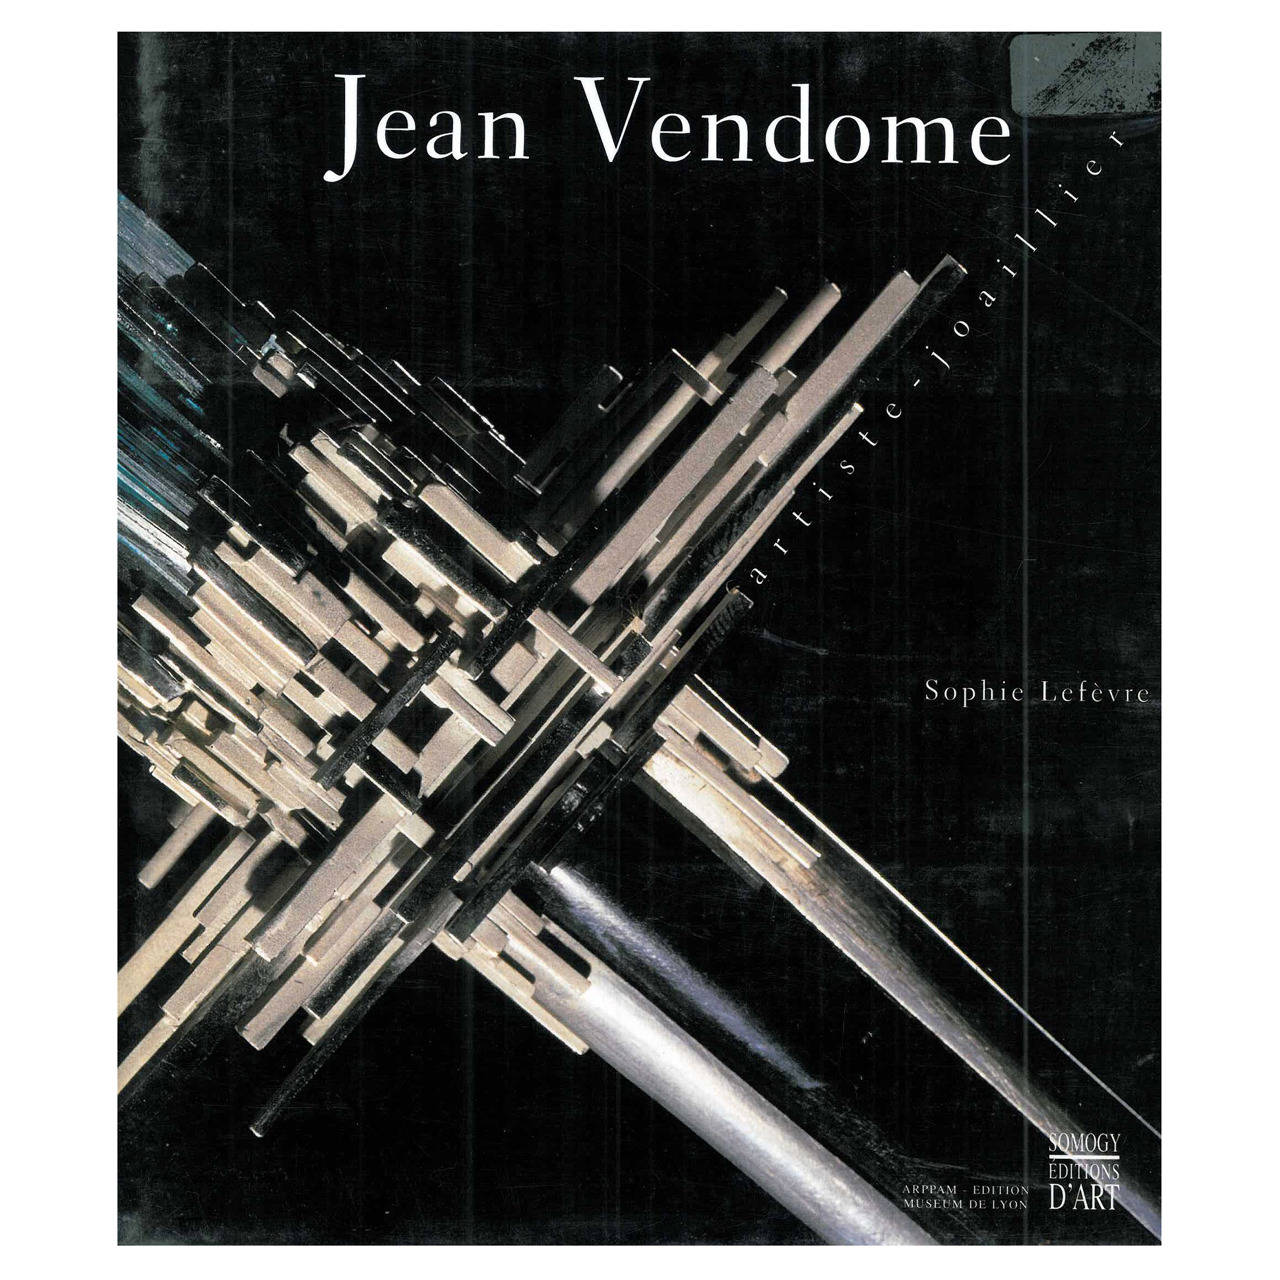 Book of Jean Vendome Artiste - Joaillier Half a Century of Creation